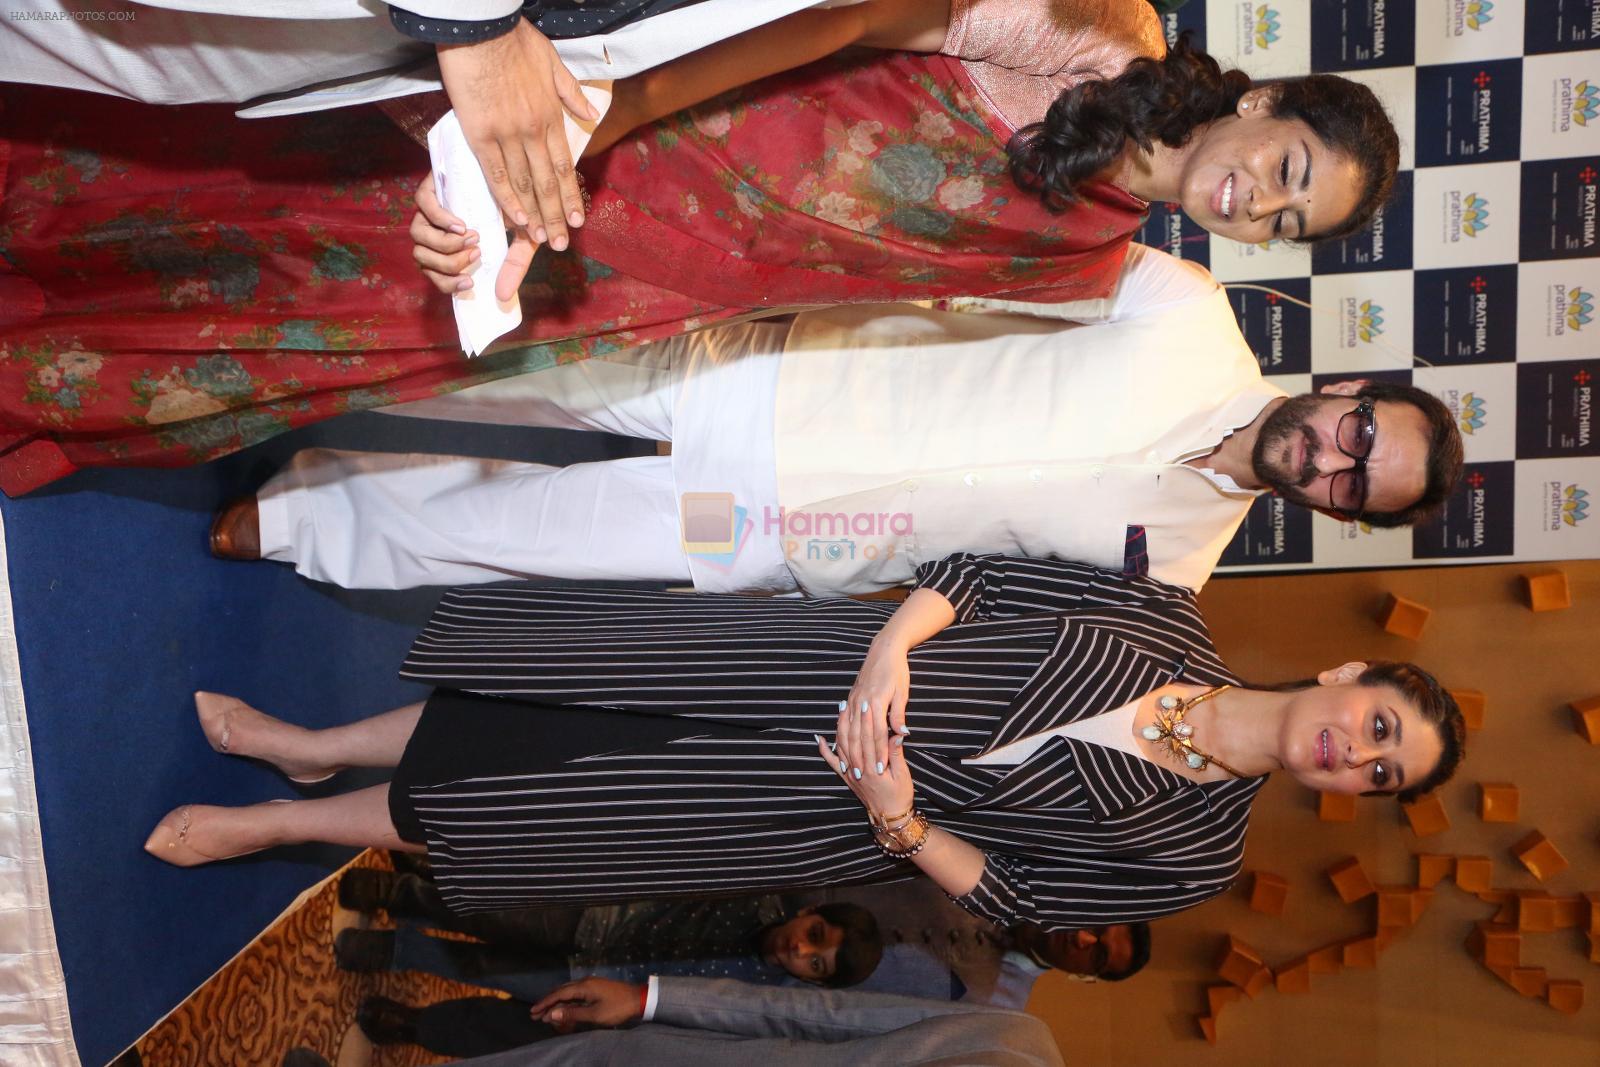 saif ali khan and kareena kapoor at prathima hospitals brand ambassador on 1st Oct 2016